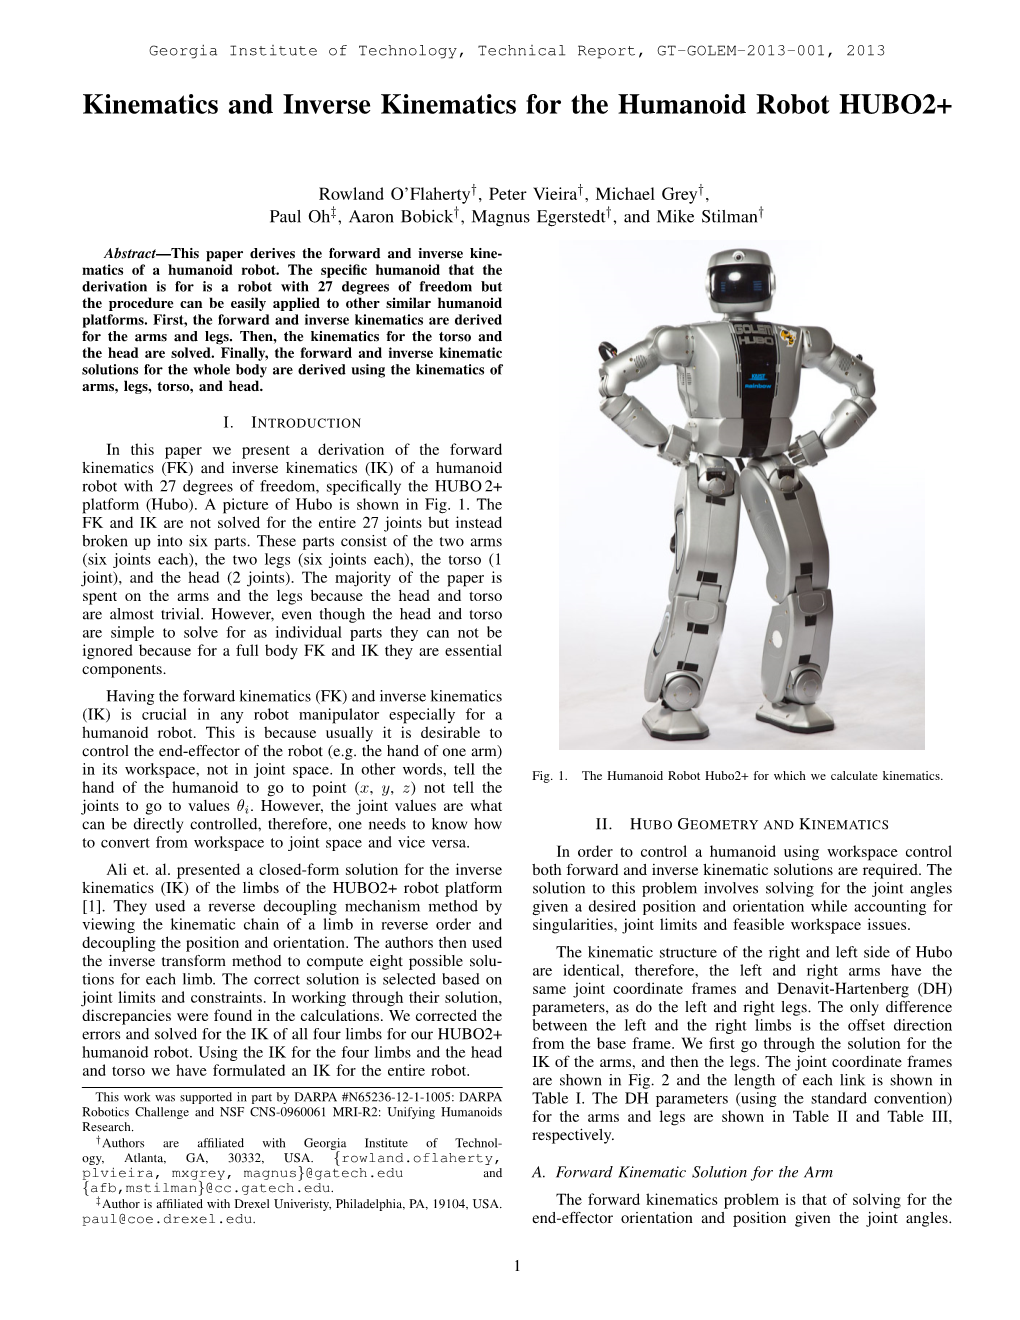 Kinematics and Inverse Kinematics for the Humanoid Robot HUBO2+